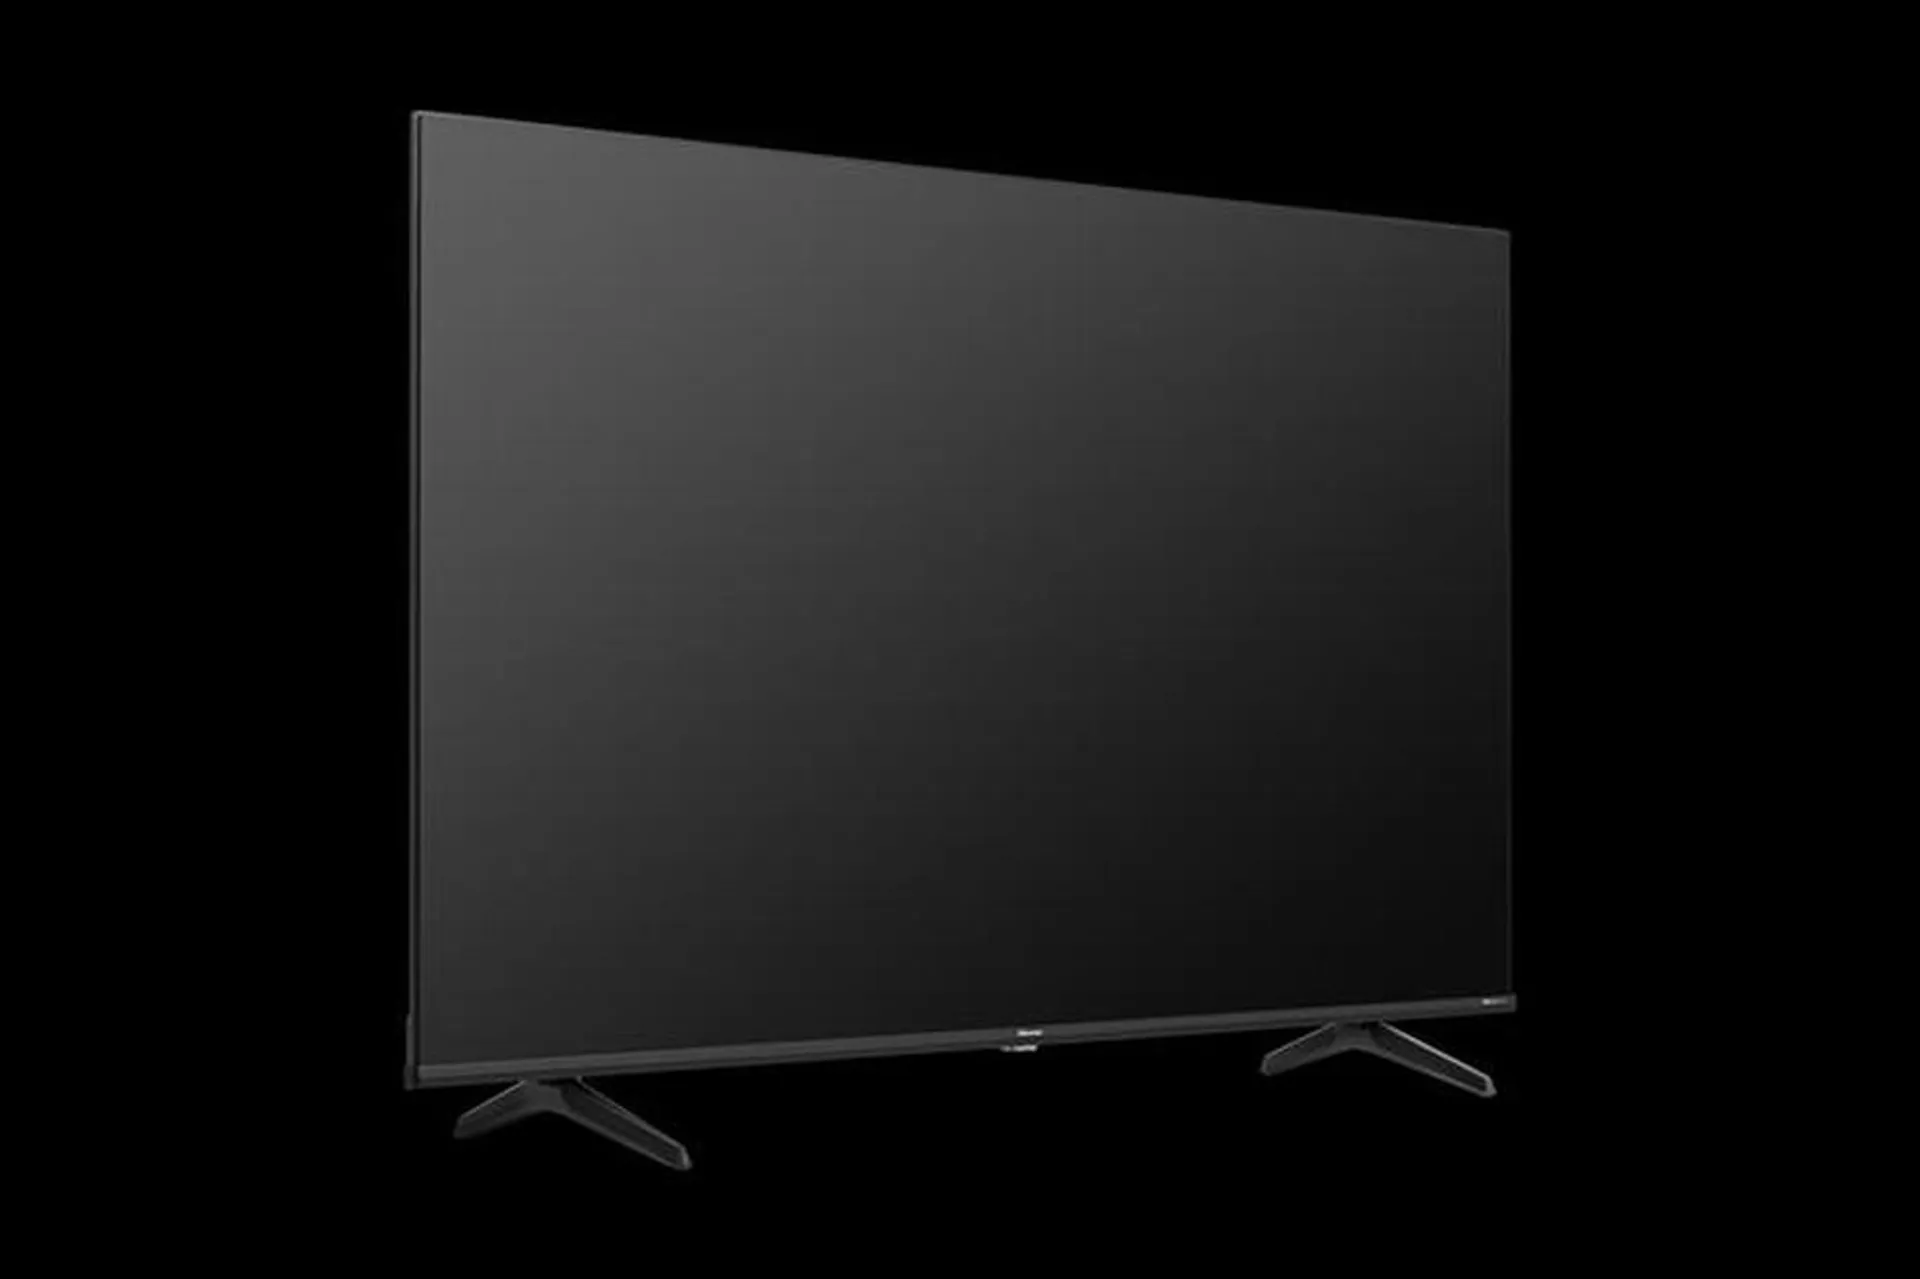 HISENSE - Smart TV QLED 4K Dolby Vision 65" 65E79HQ-Black